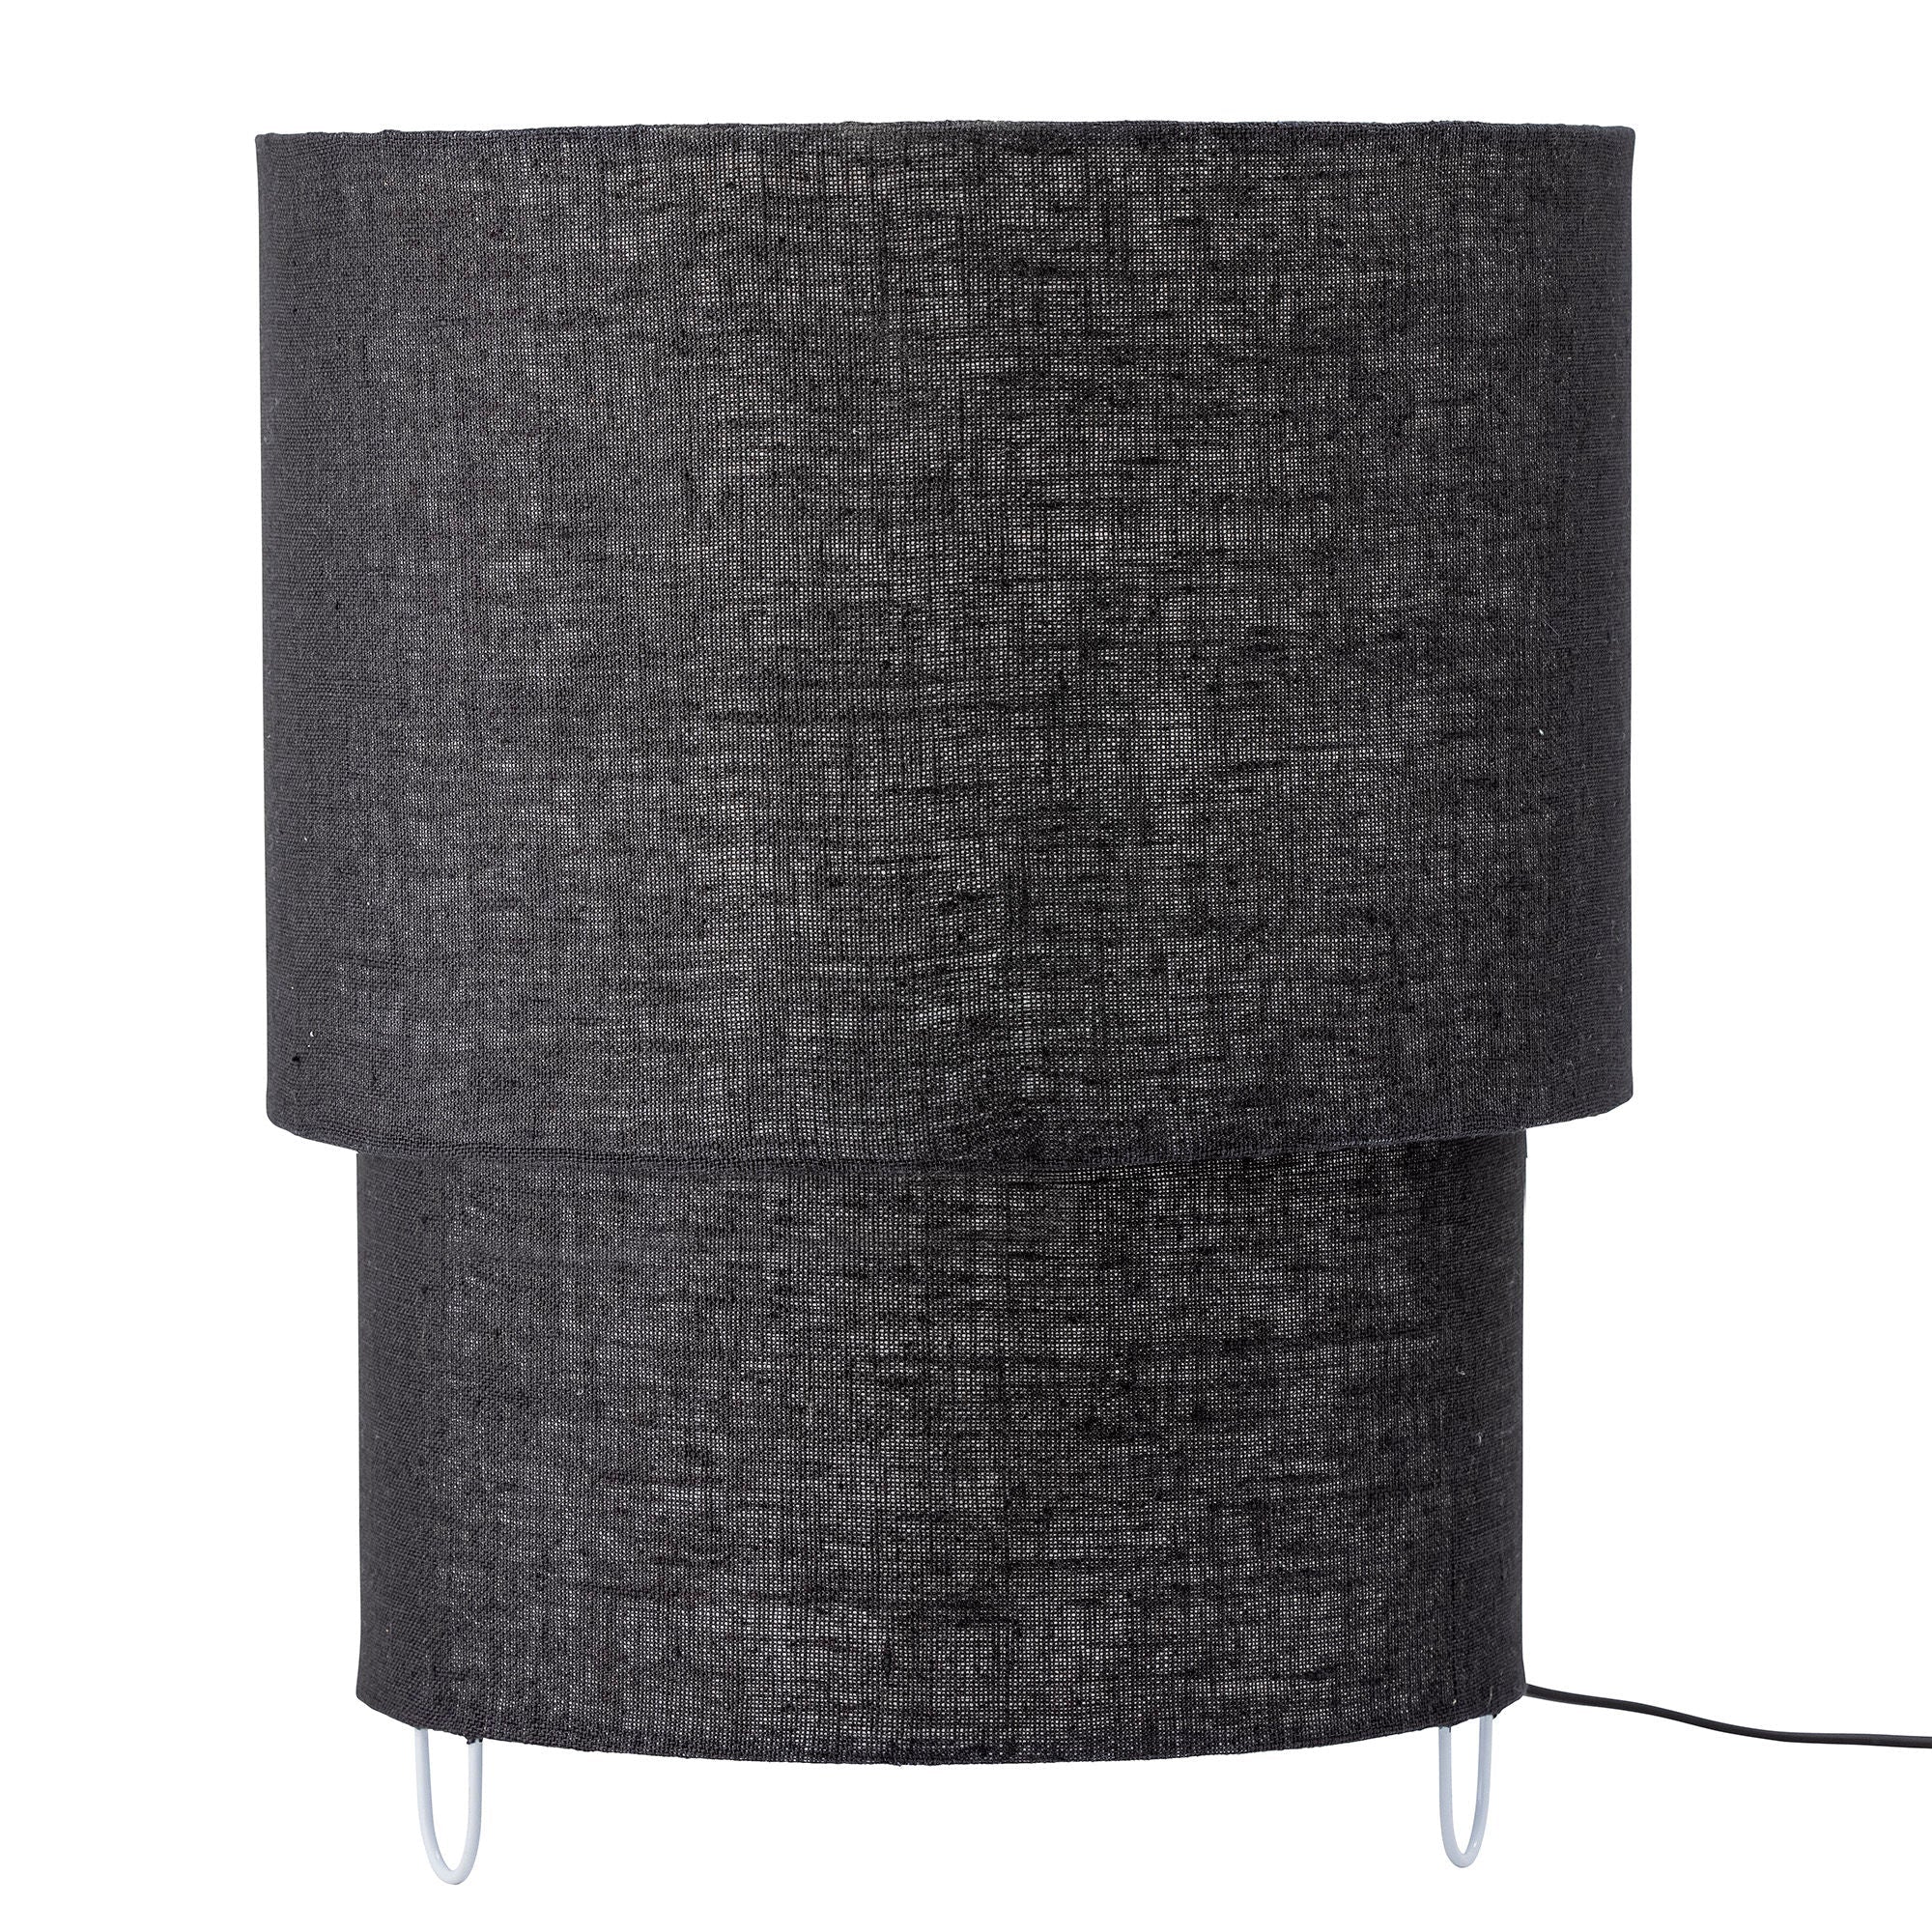 Bloomingville Zalt Table lamp, Black, Linen